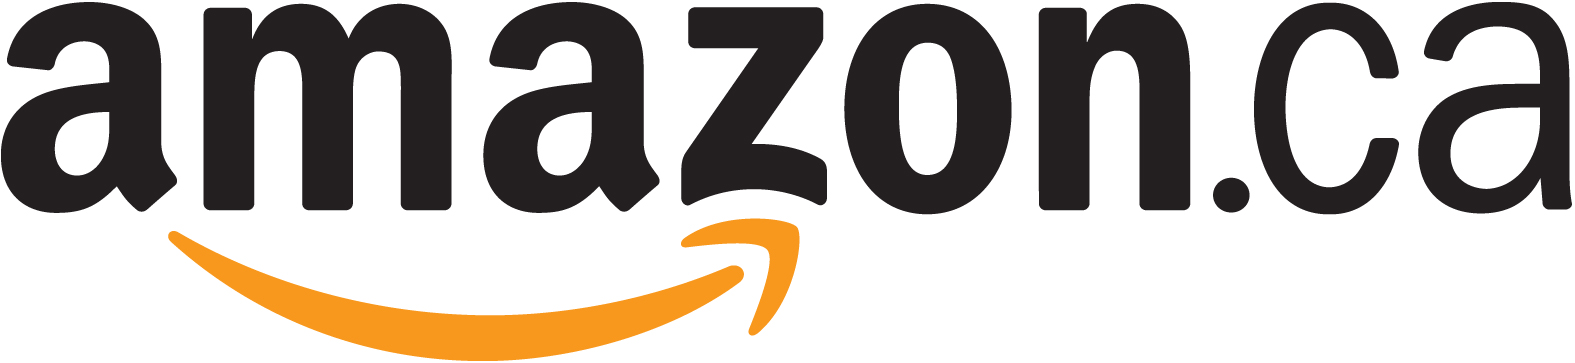 Amazon Canada
Logo